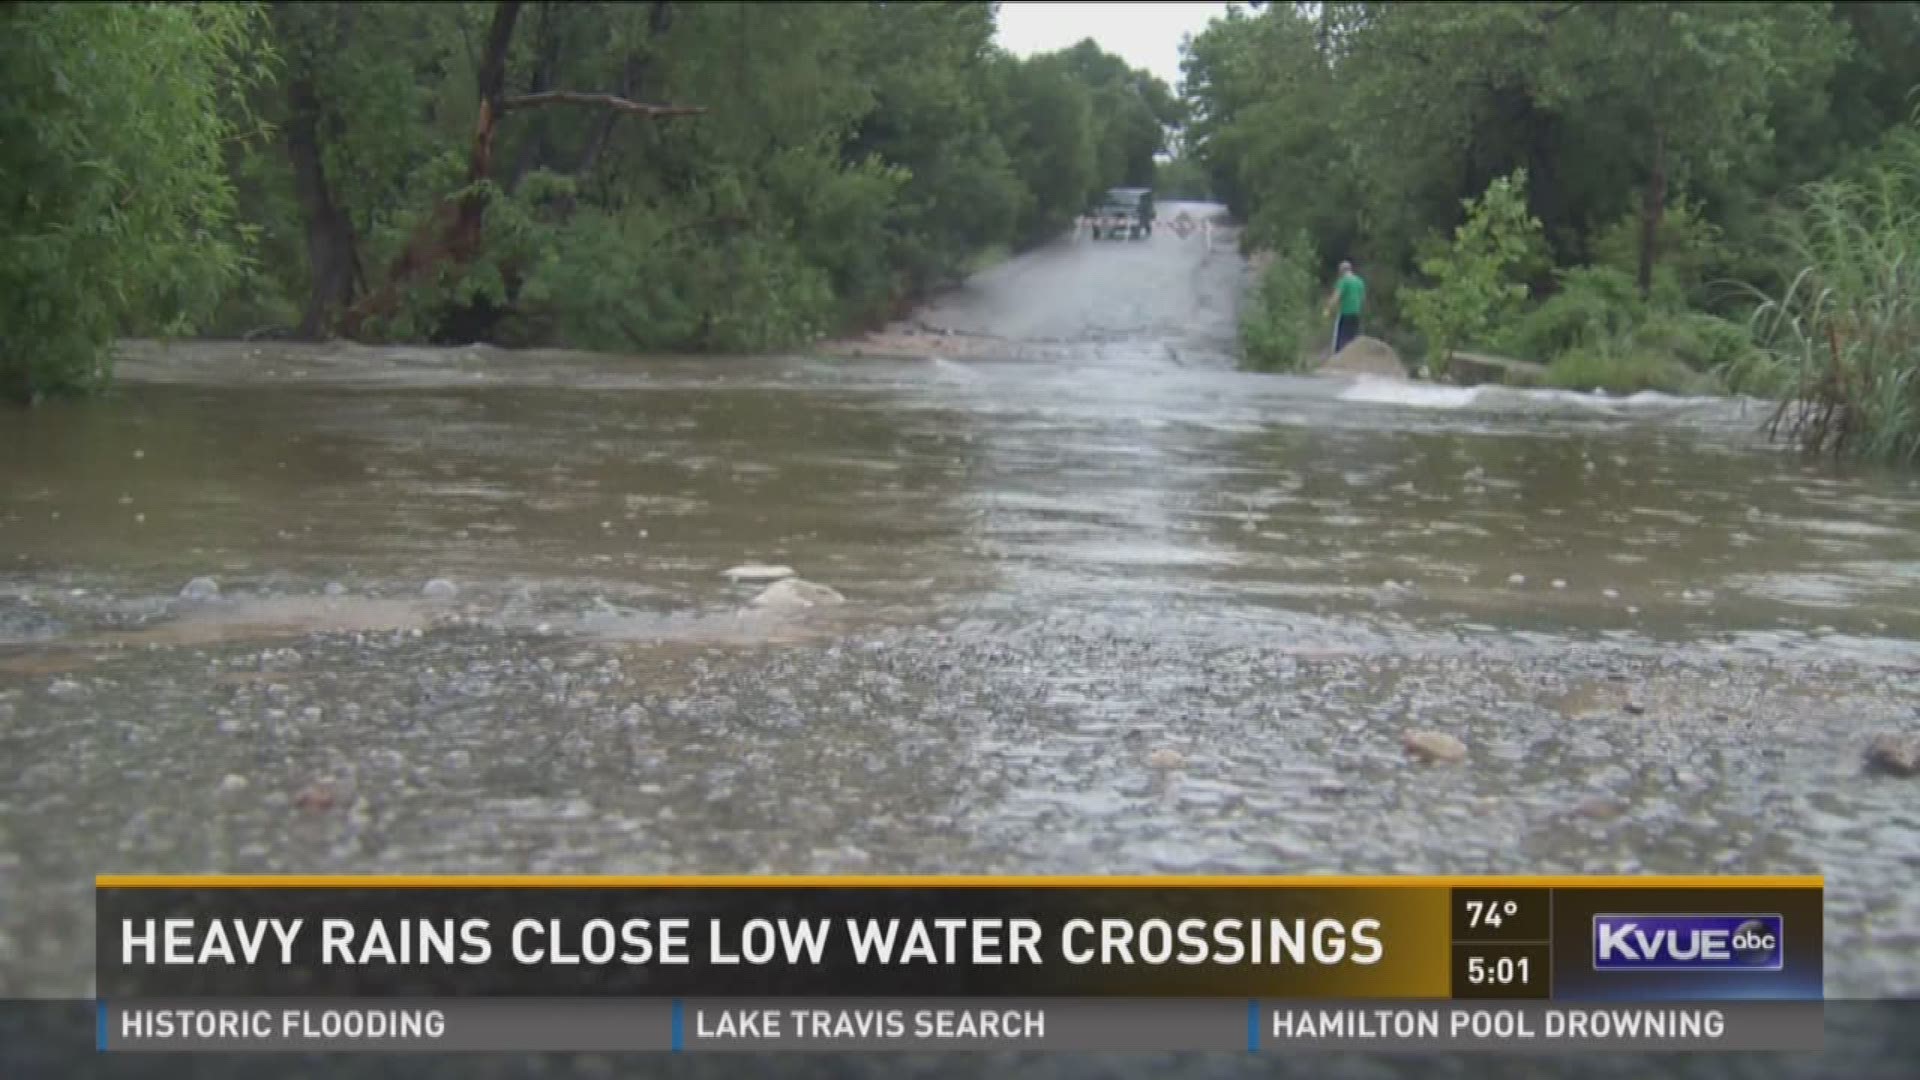 Heavy rains close low water crossings